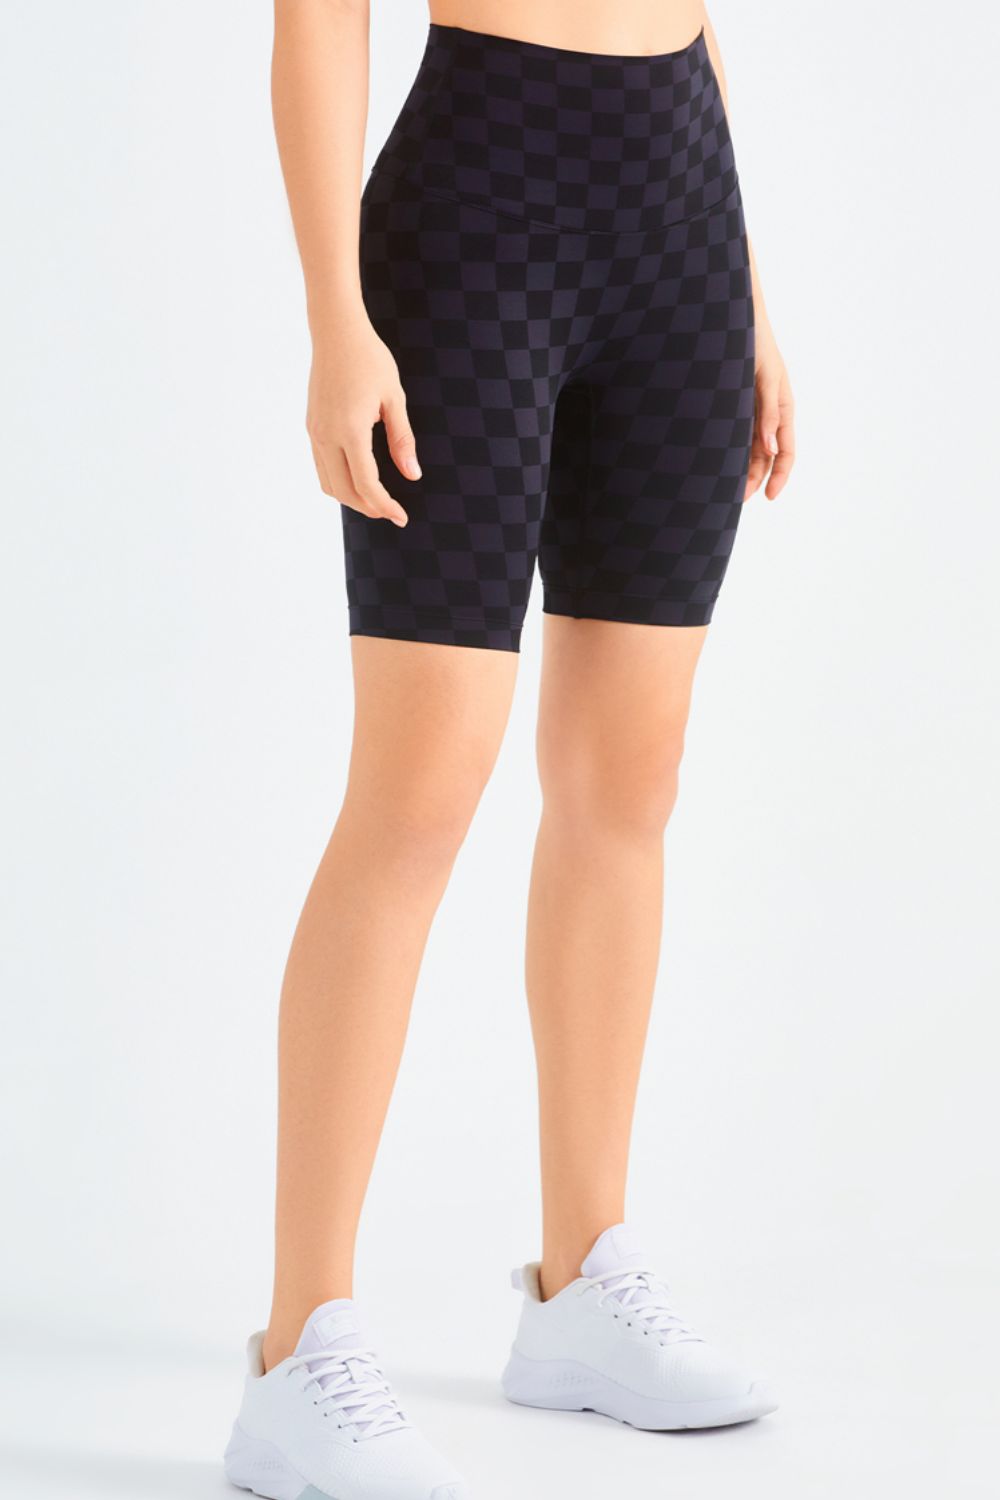 Checkered Wide Waistband Biker Shorts - Women’s Clothing & Accessories - Shorts - 8 - 2024